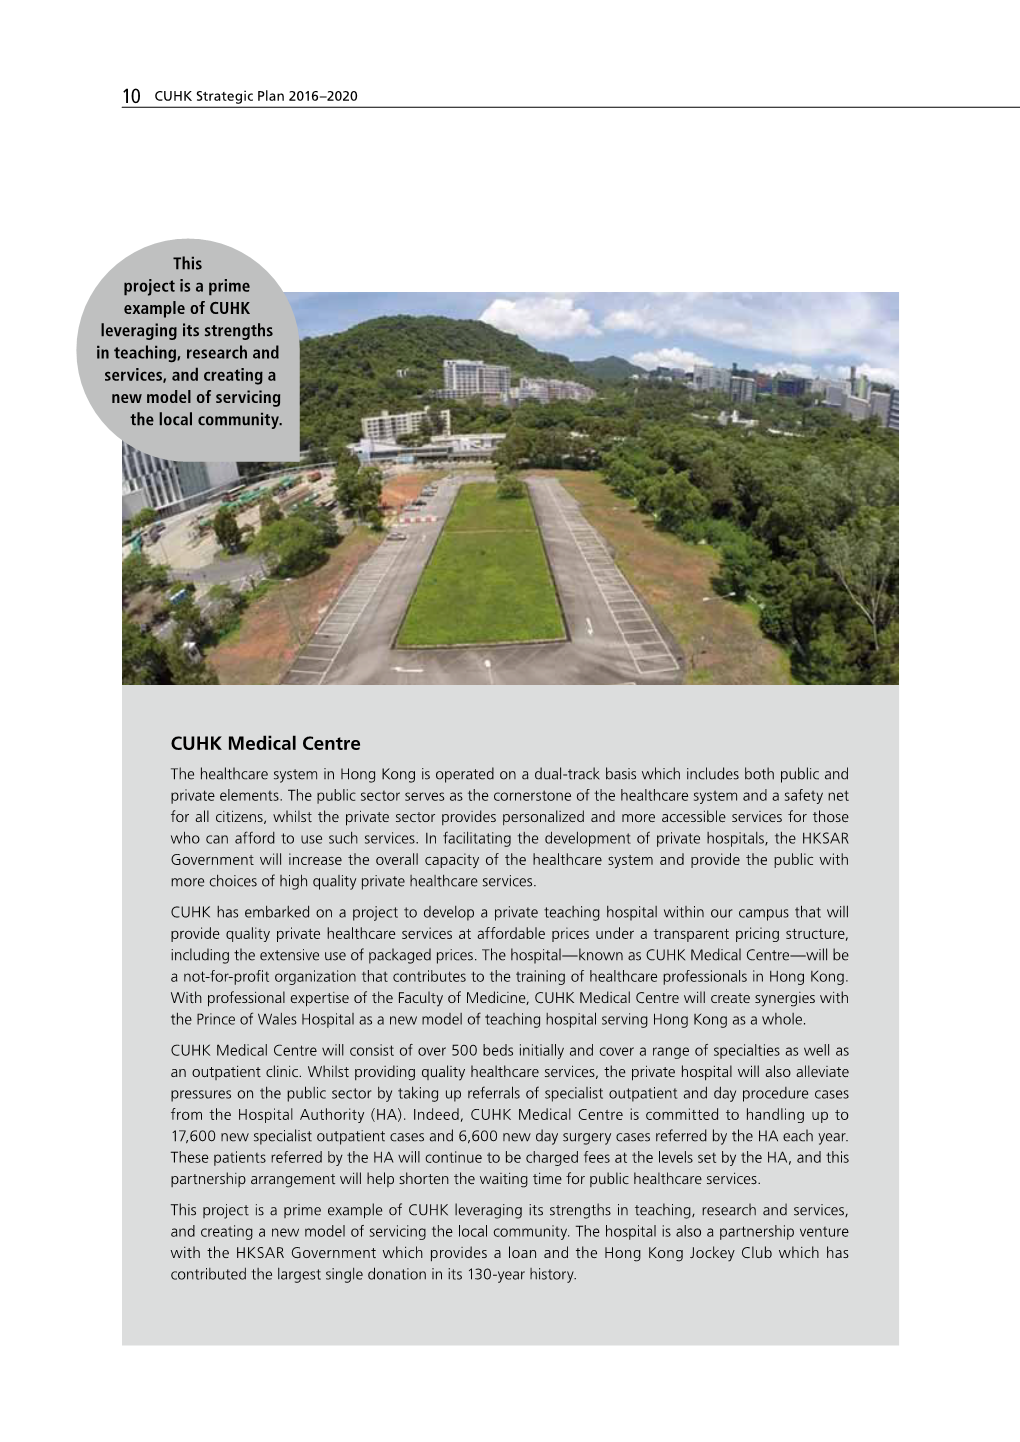 Planning Context — the Society in Hong Kong — CUHK Medical Center